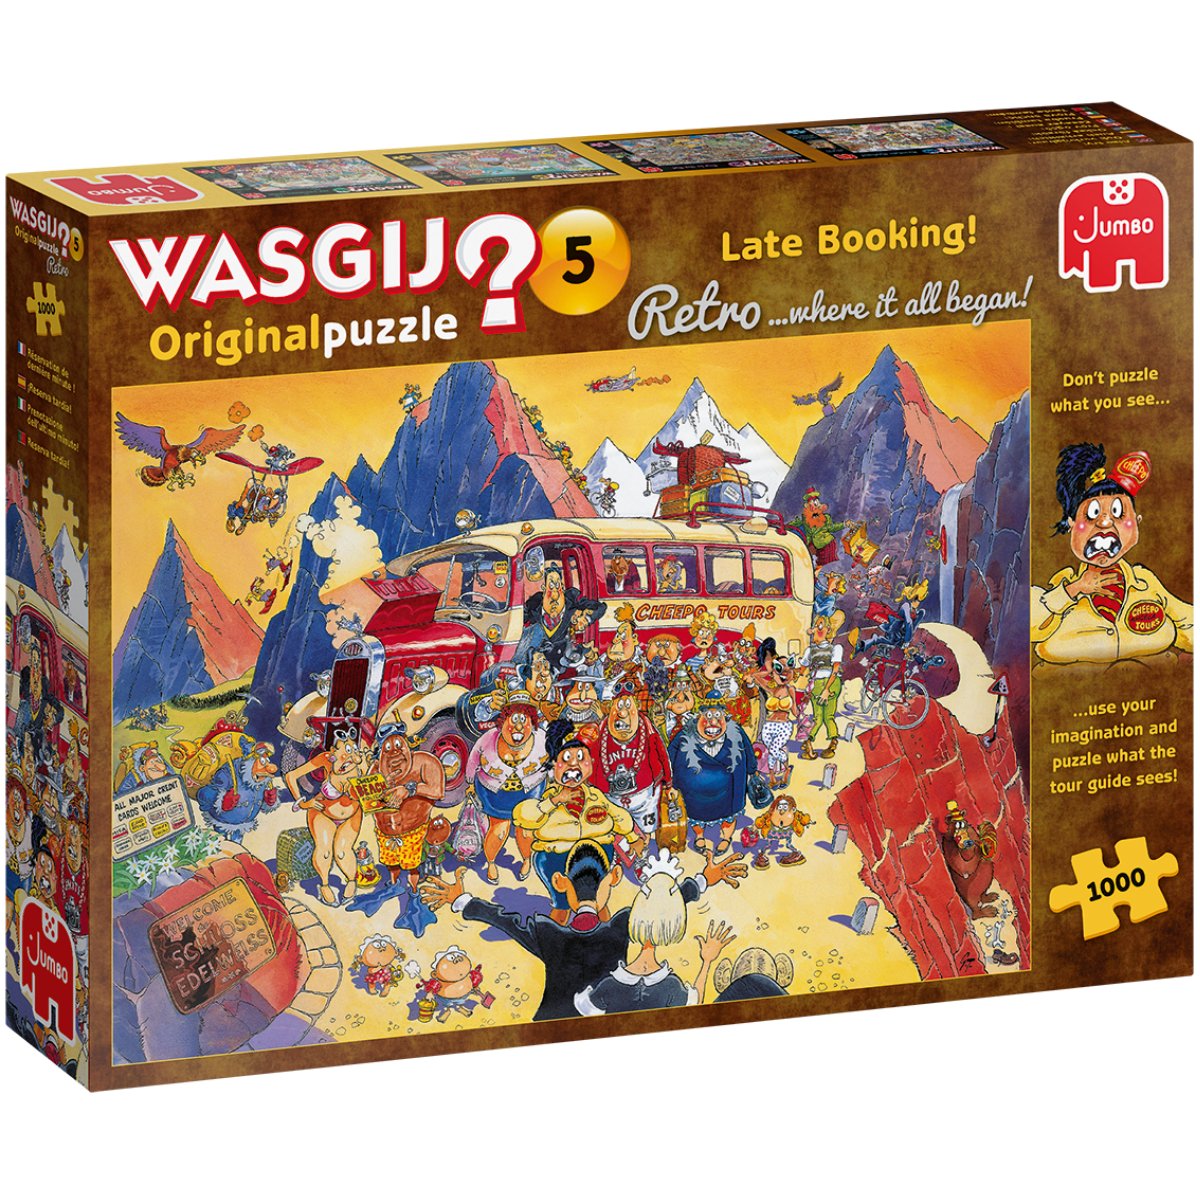 Wasgij Retro Original 5 Late Booking! Jigsaw Puzzle (1000 Pieces) - Phillips Hobbies